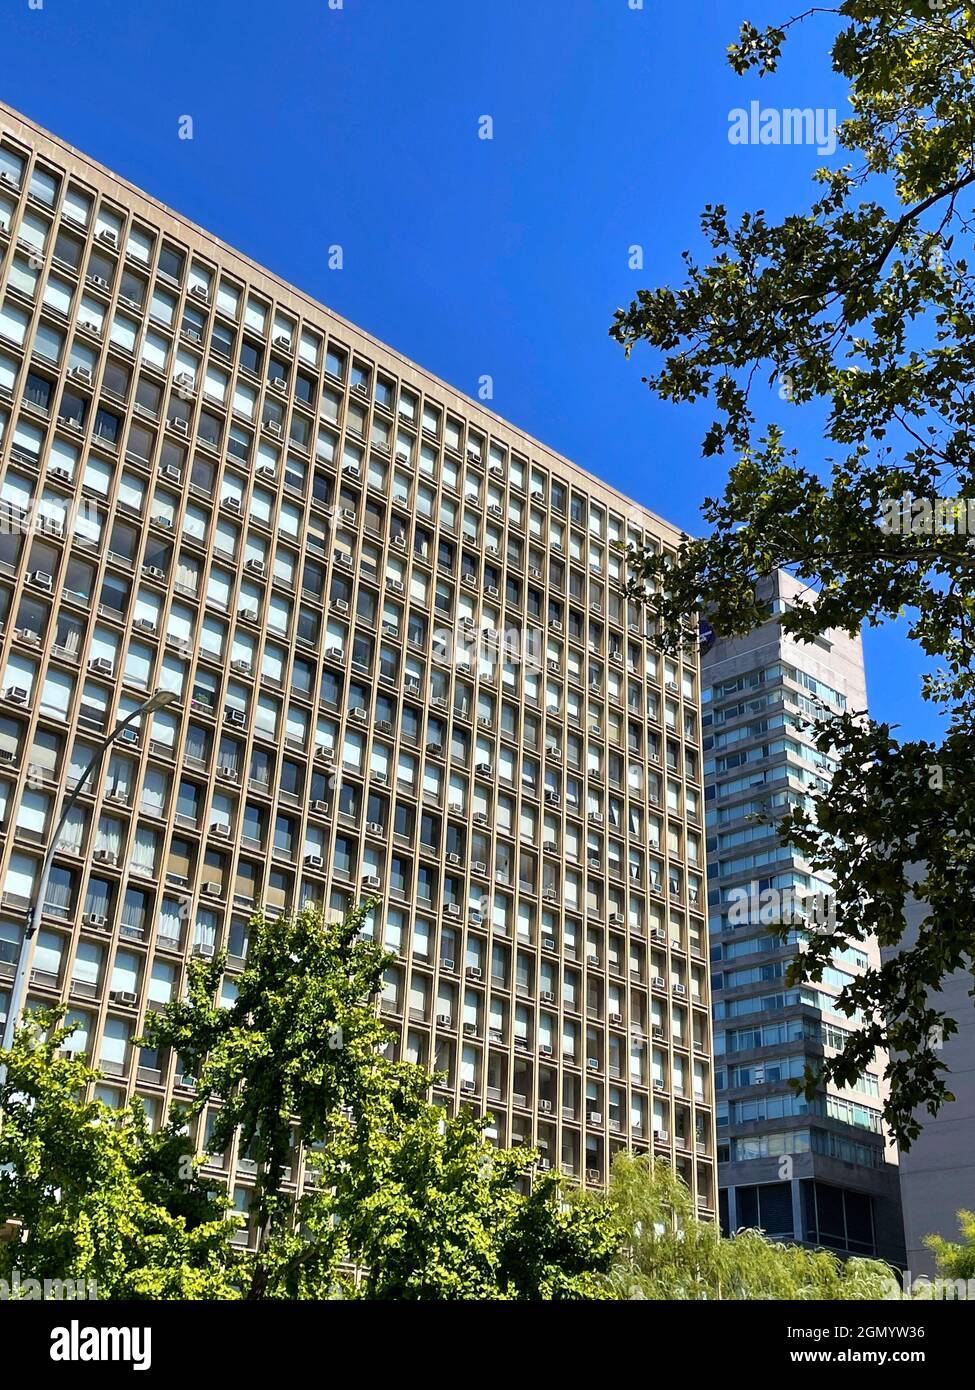 Kips Bay Towers Condominium Complex was designed by architect I.M. Pei, New York City, USA Stock Photo